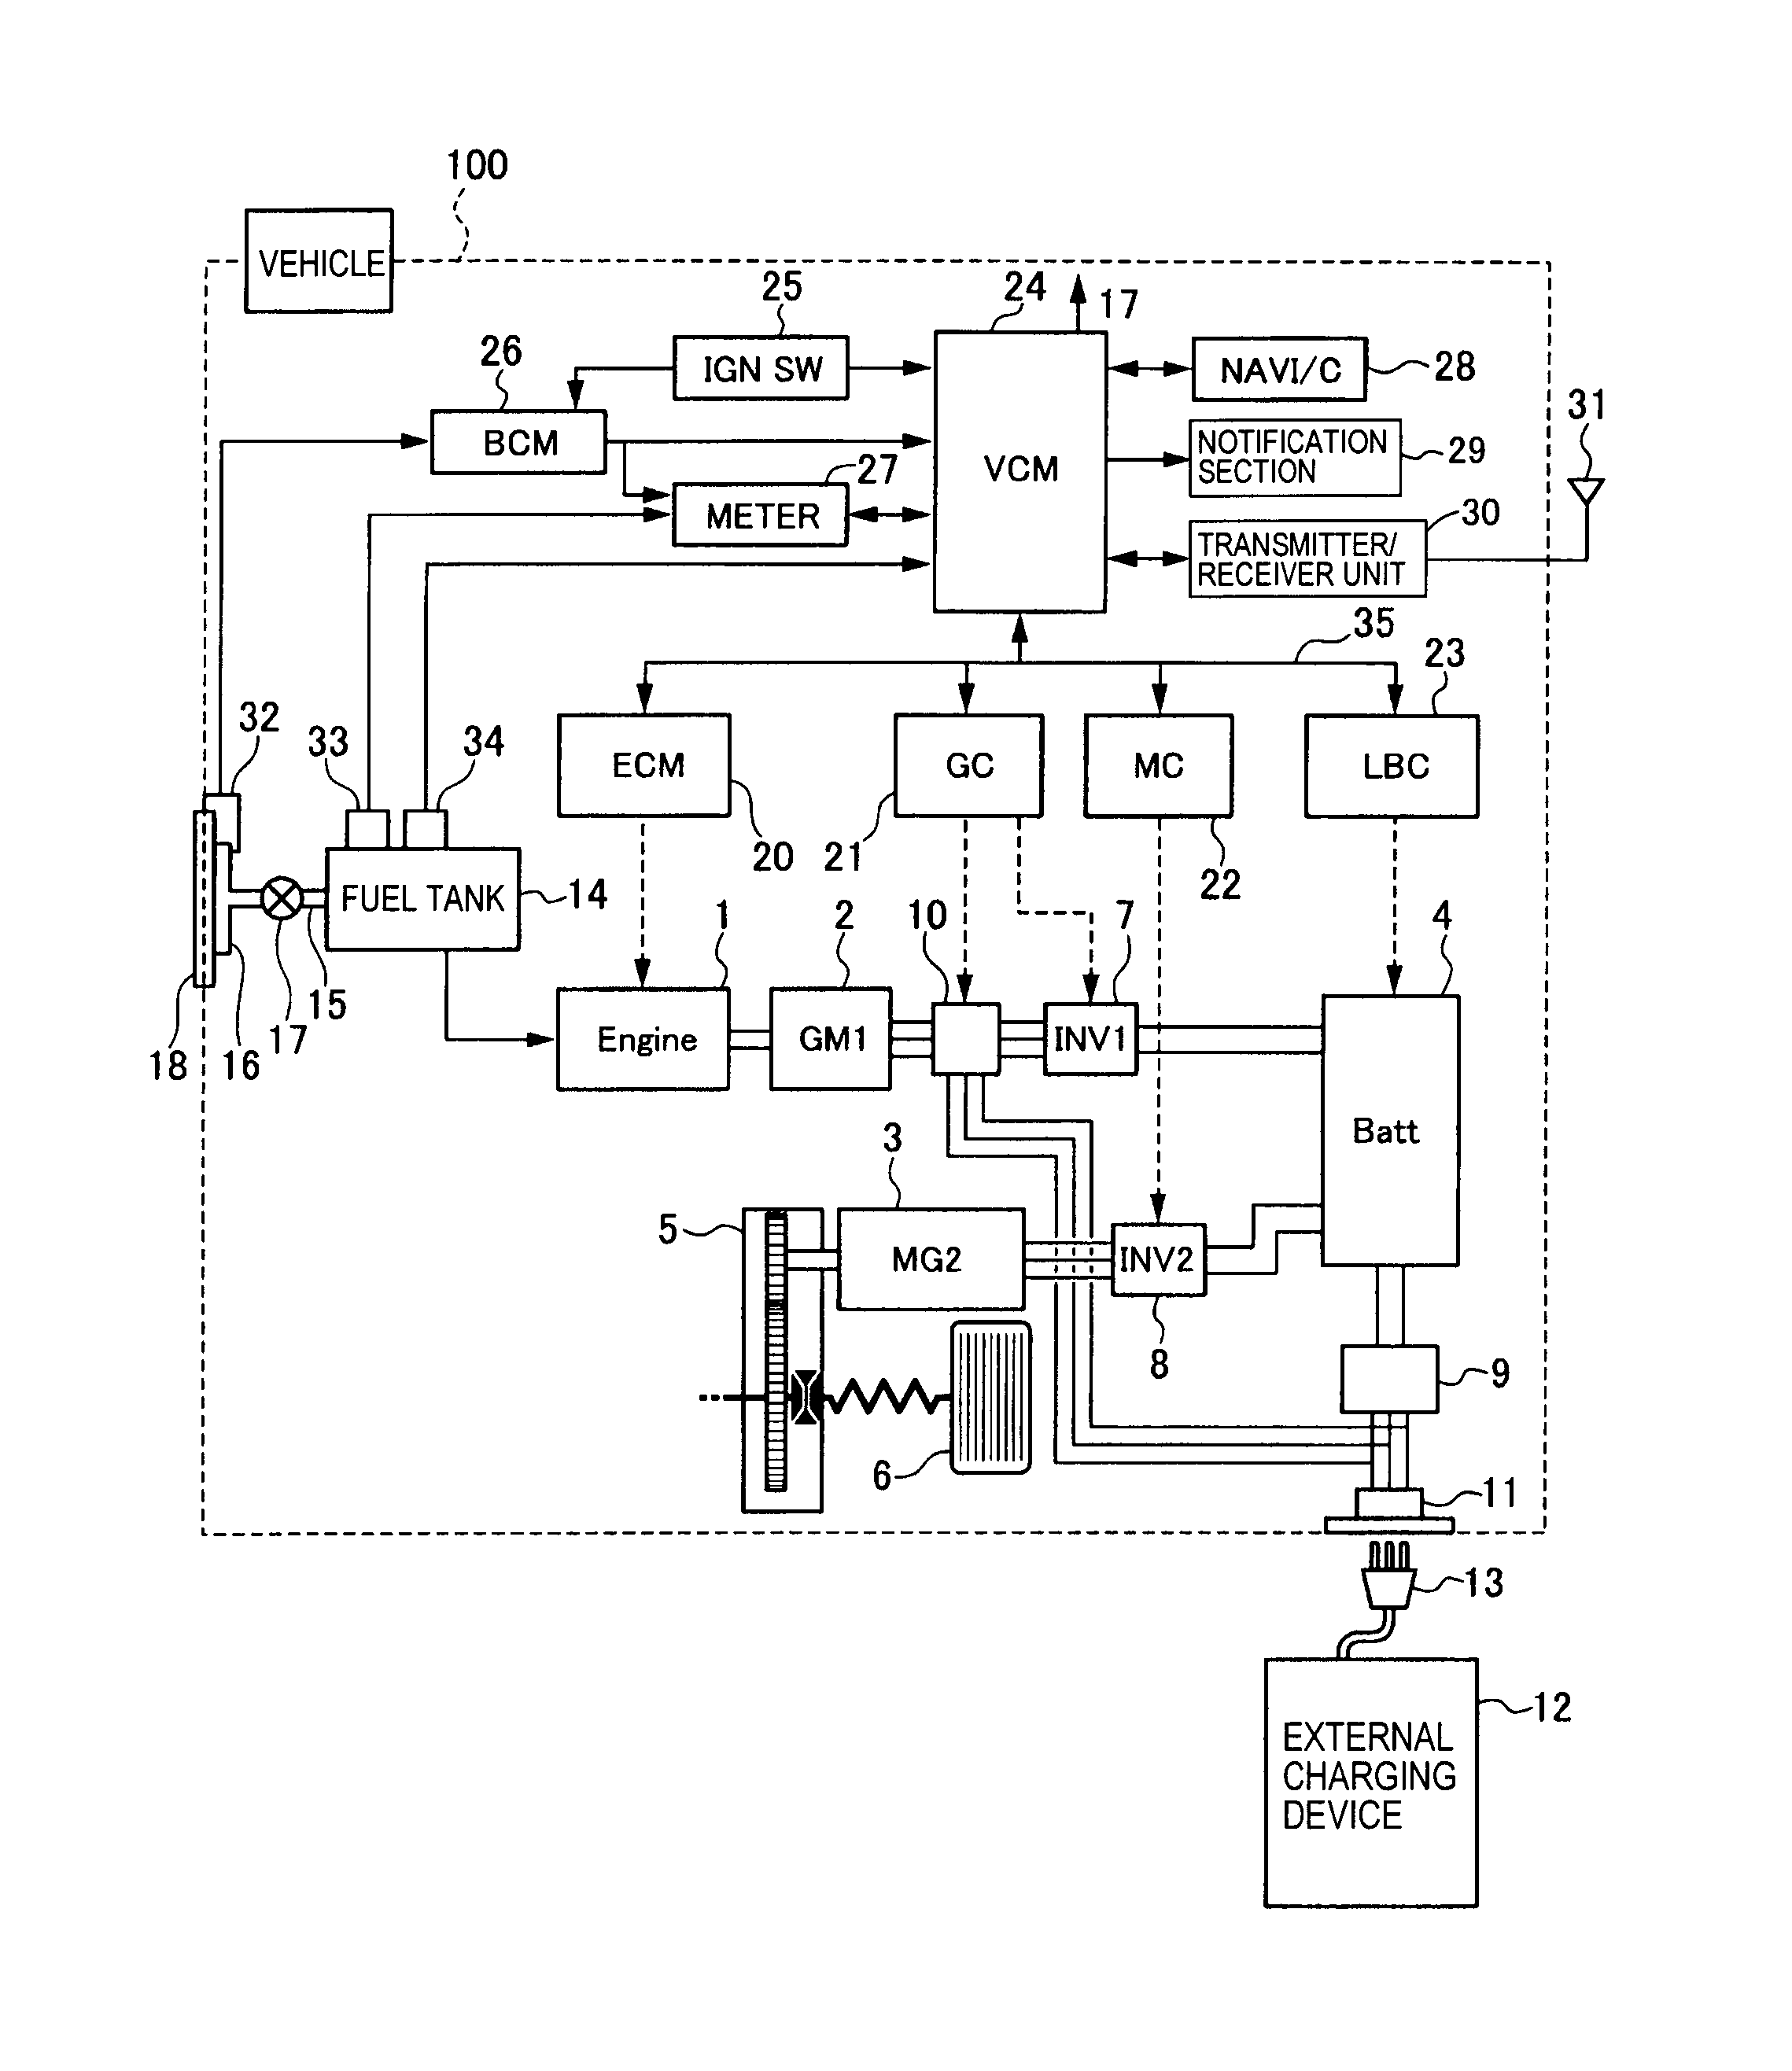 wiring diagram for mks gen 1.4